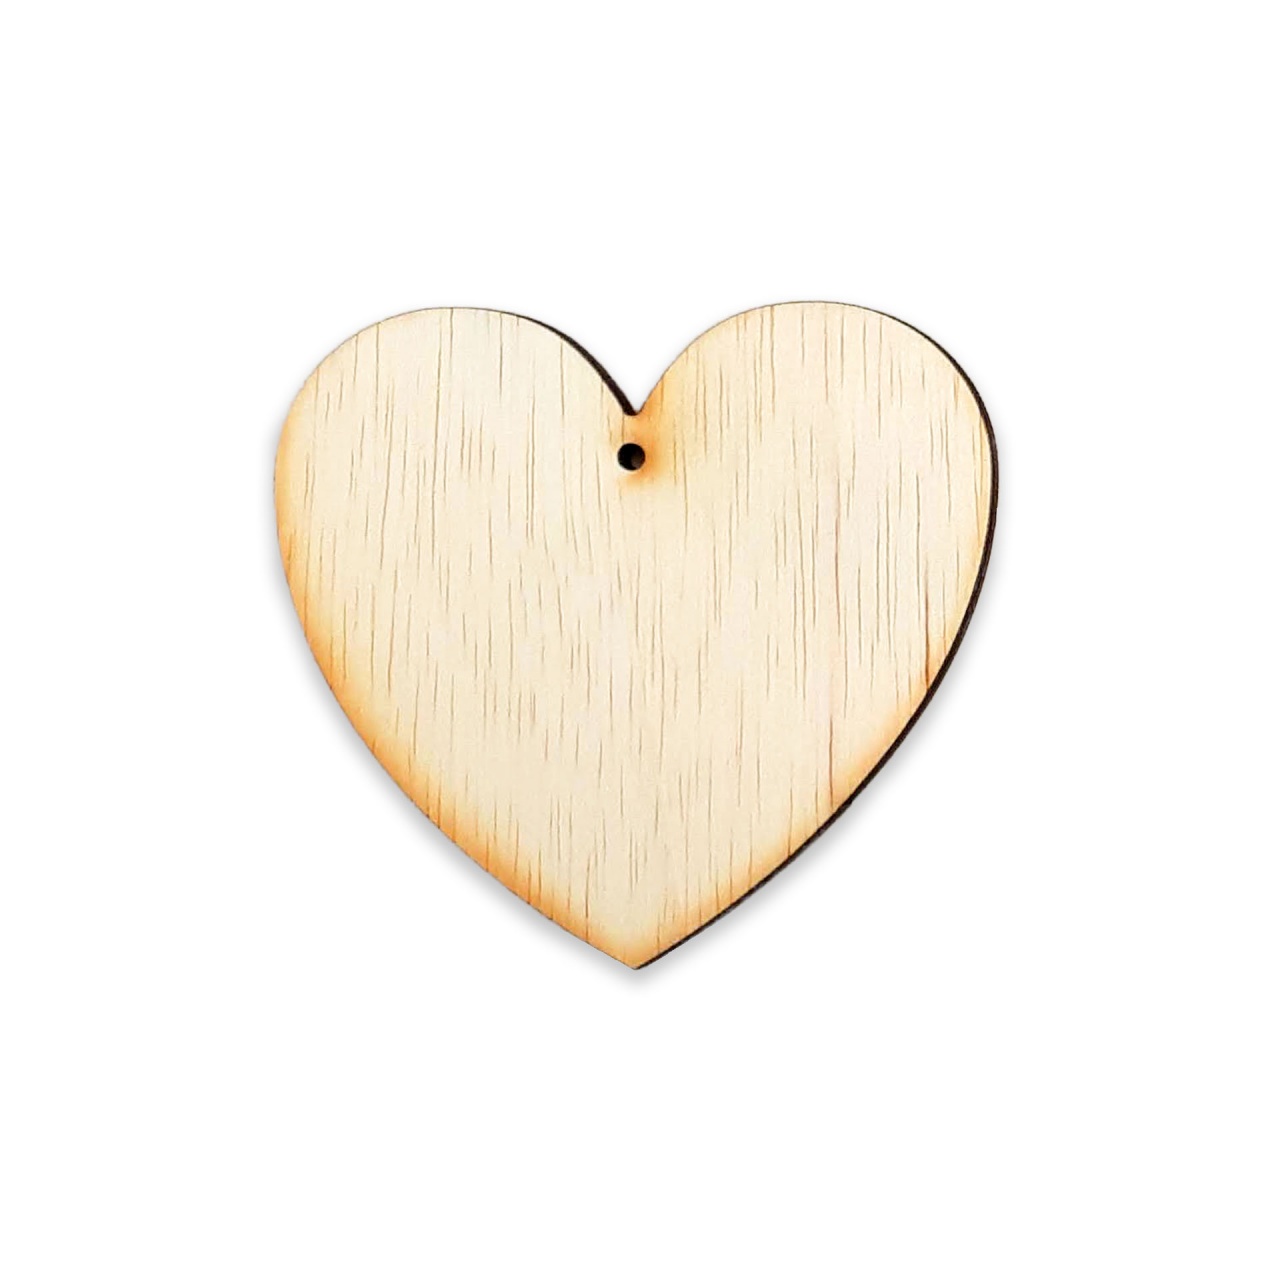 Inimă, 5×4,5 cm, placaj :: 5×4,5 cm